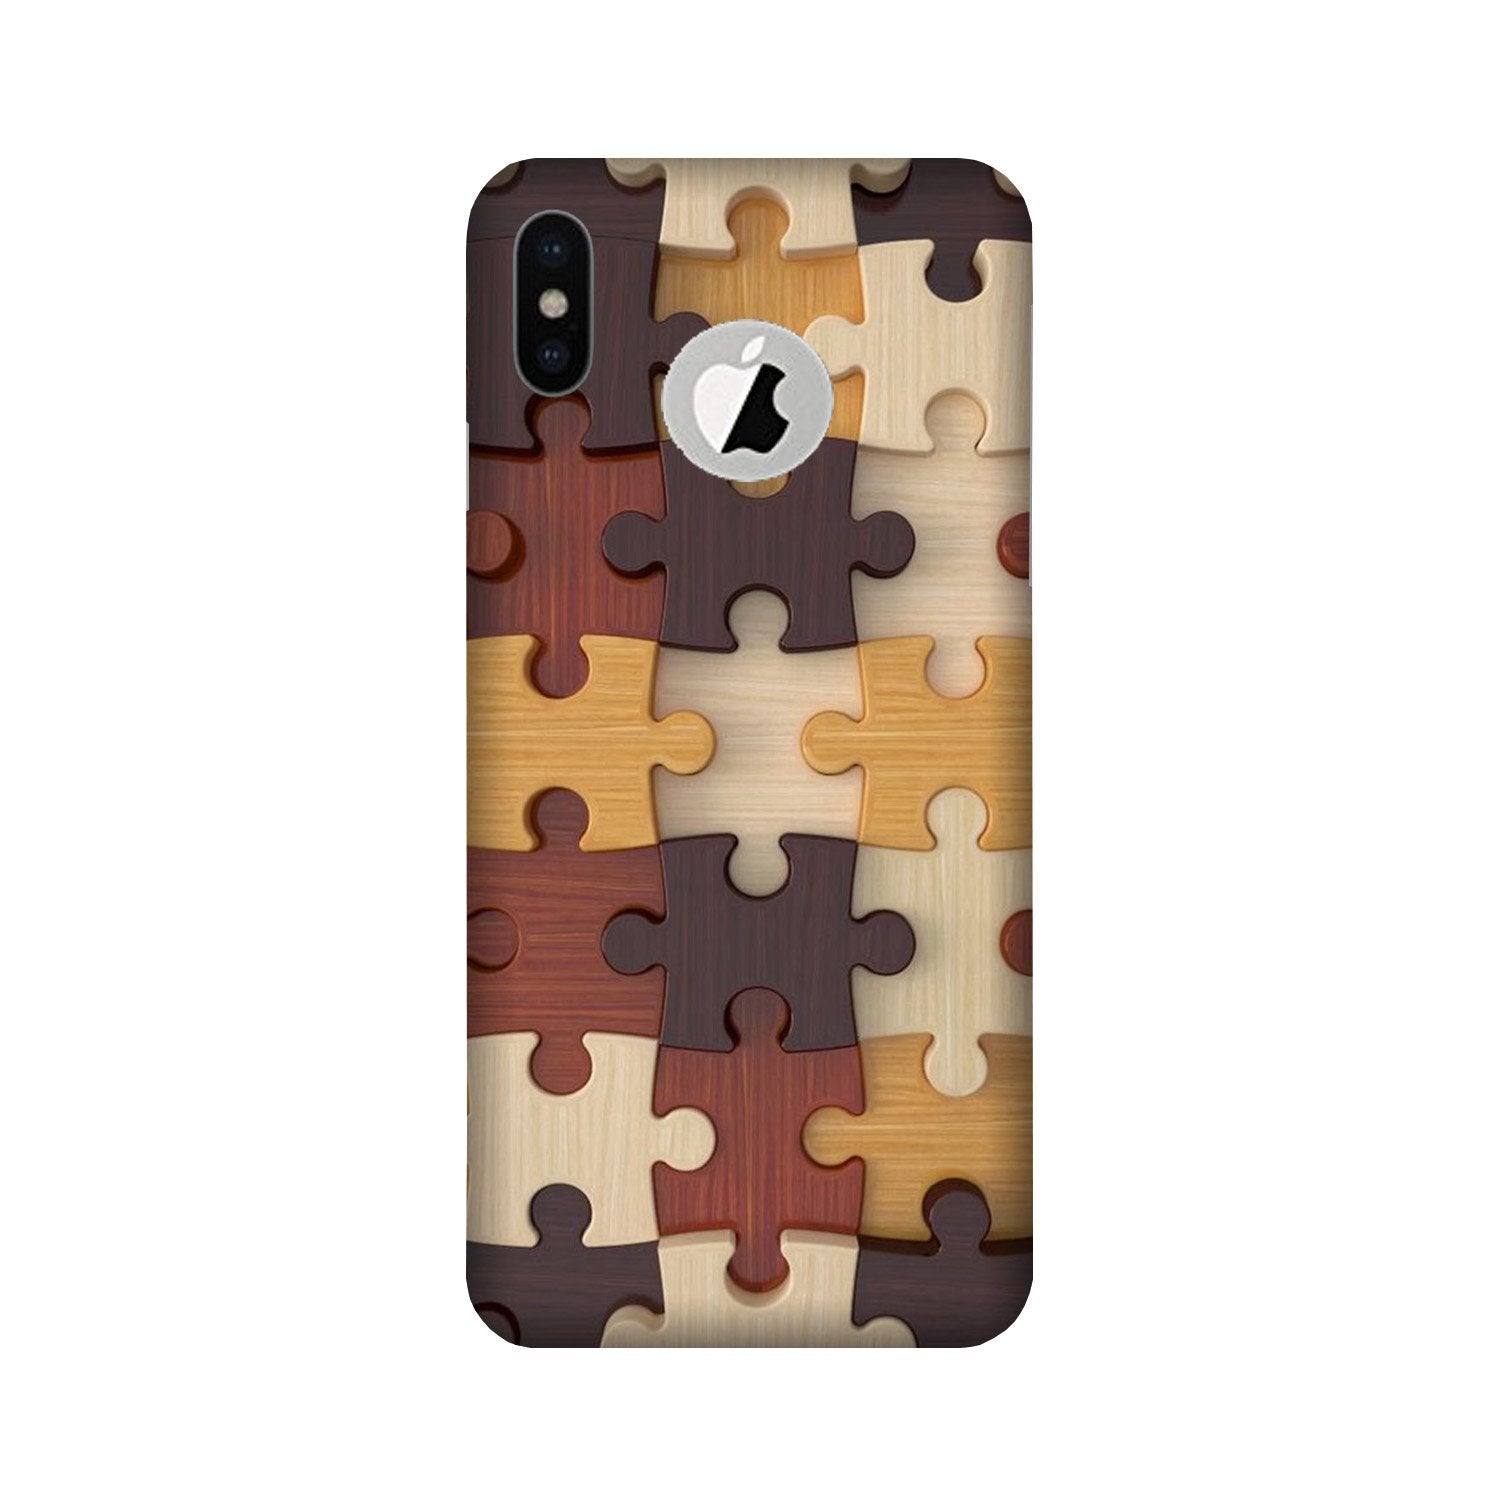 Puzzle Pattern Case for iPhone X logo cut (Design No. 217)